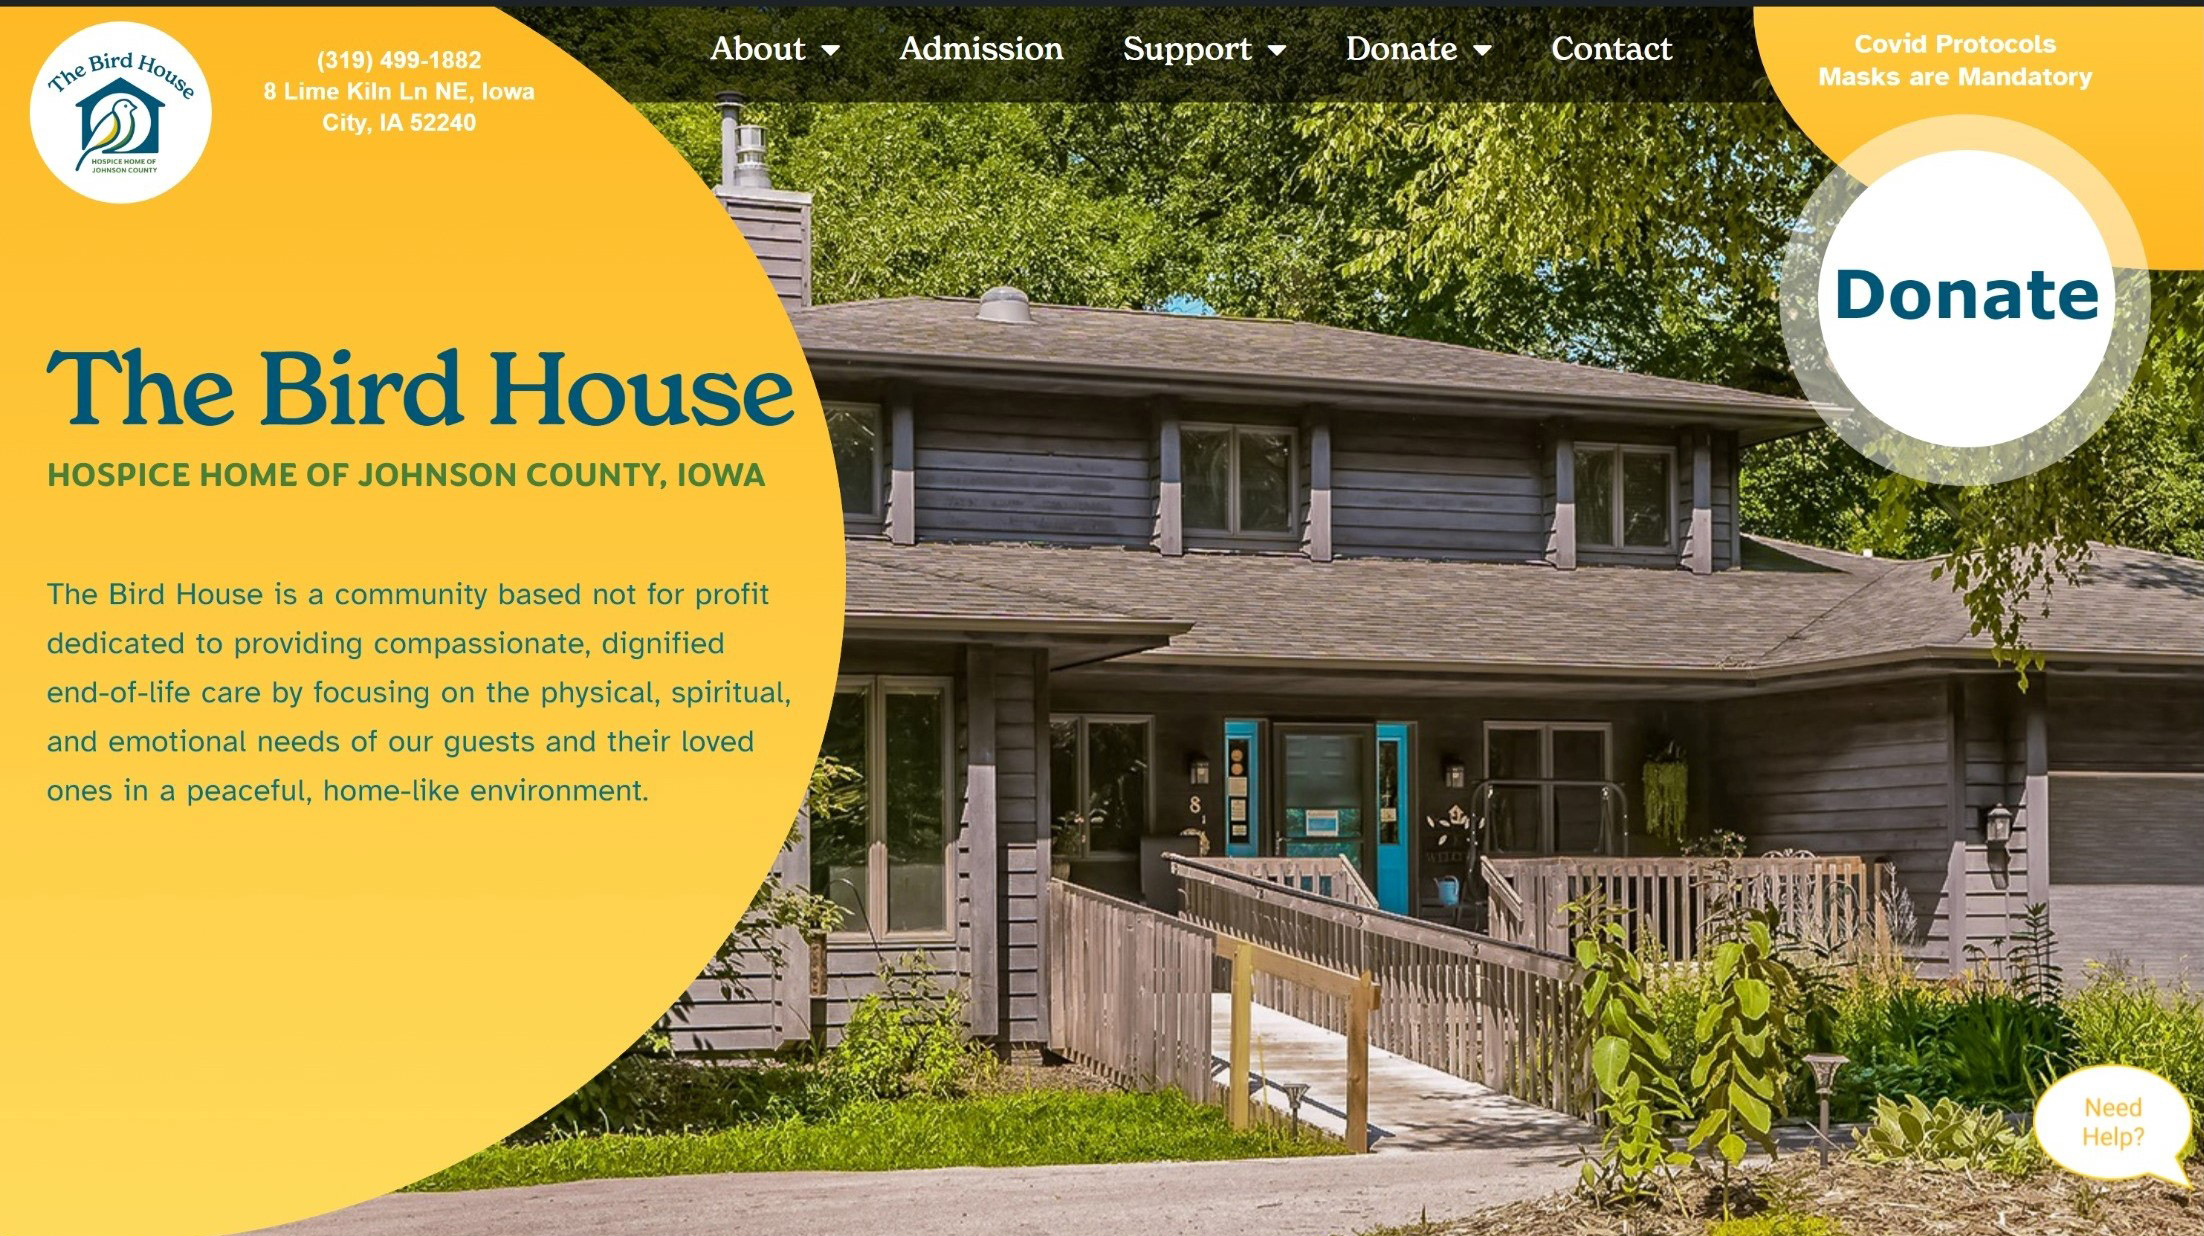 The Bird House Home of Johnson County Iowa Website Homepage